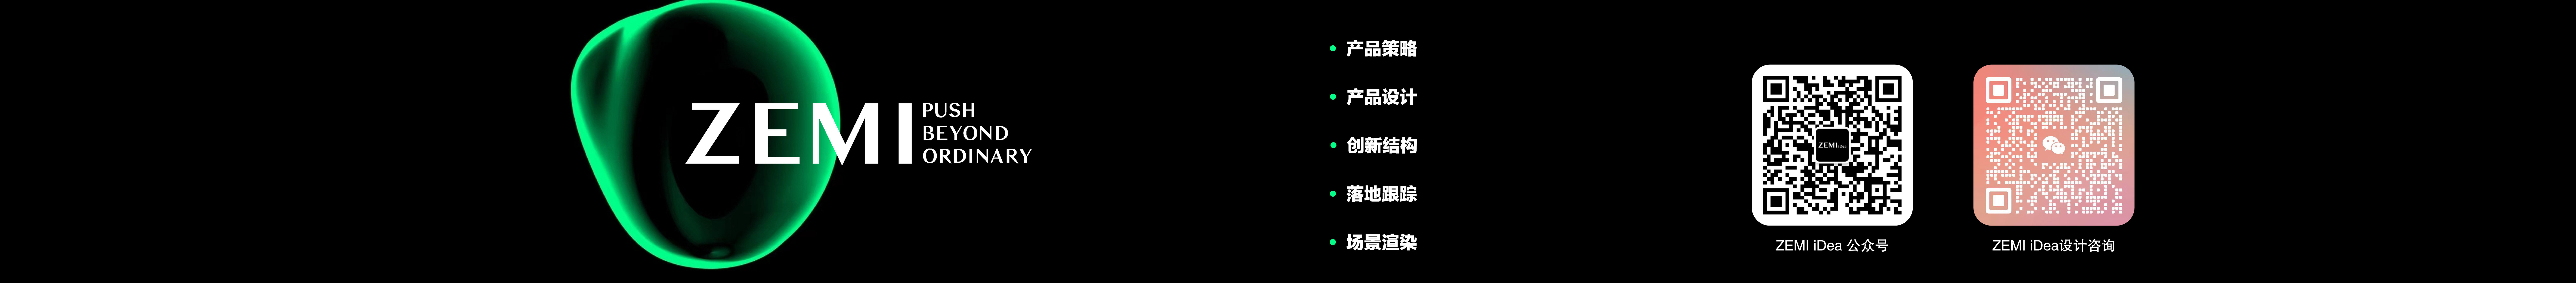 Banner del profilo di honfer zhang